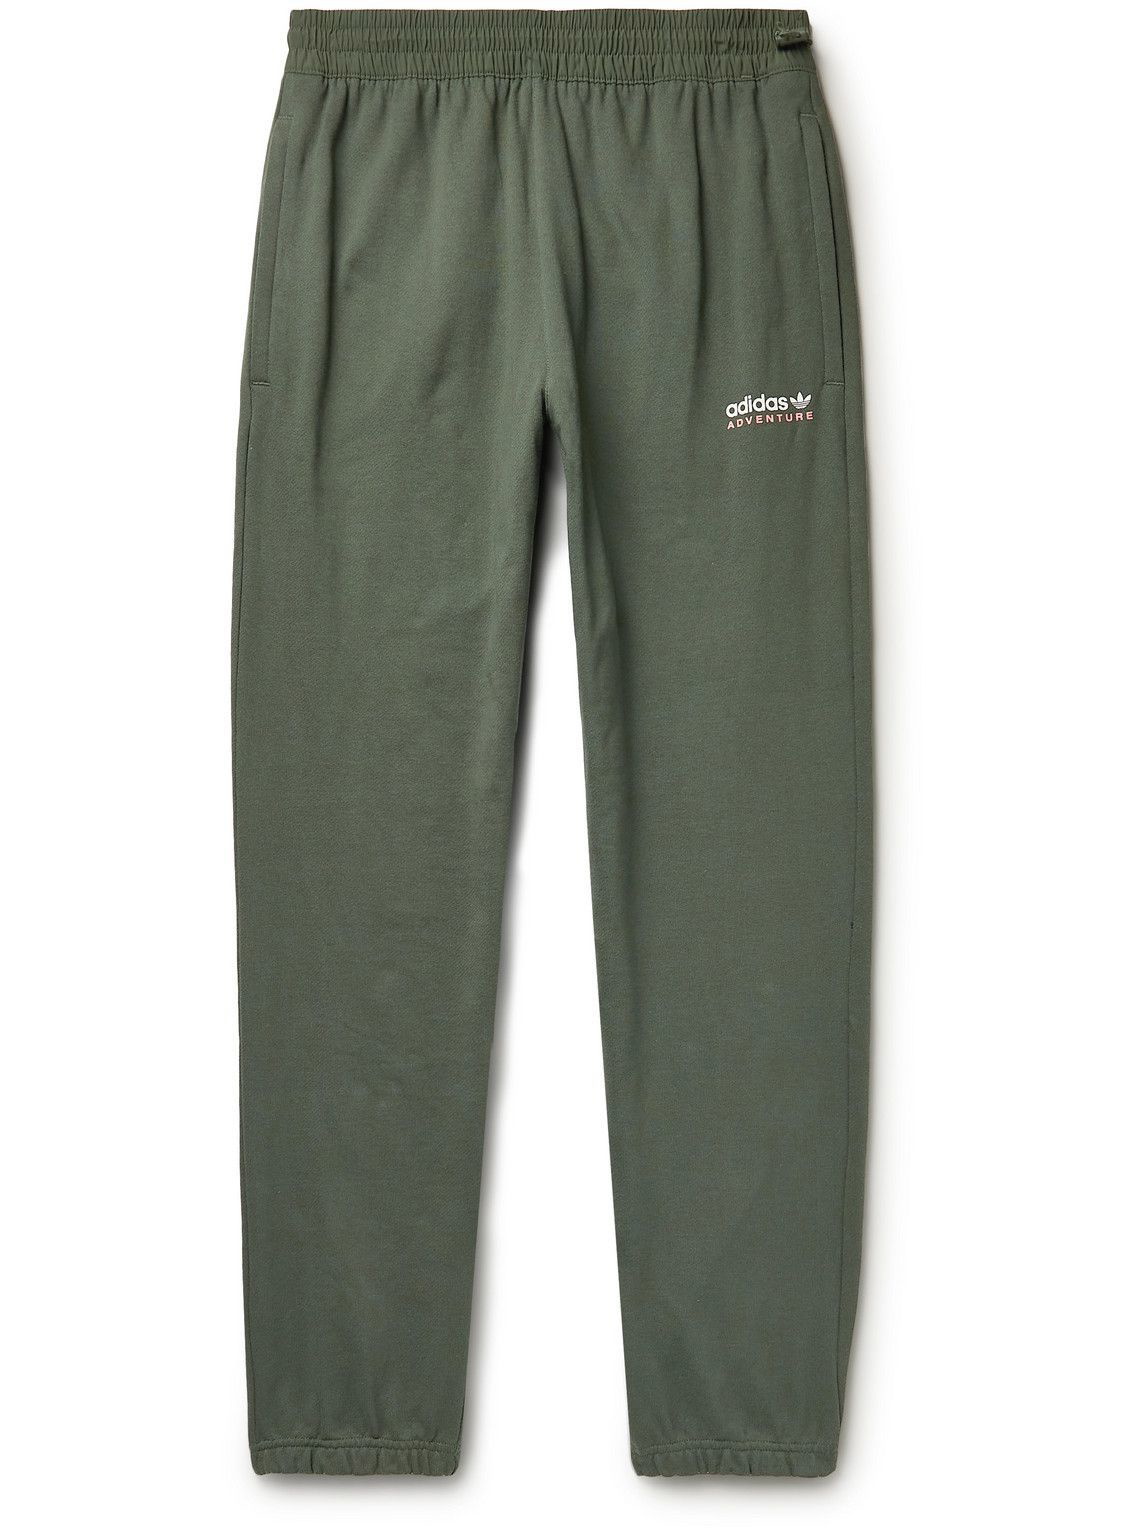 adidas Originals - Tapered Cotton-Jersey Sweatpants Green adidas Originals